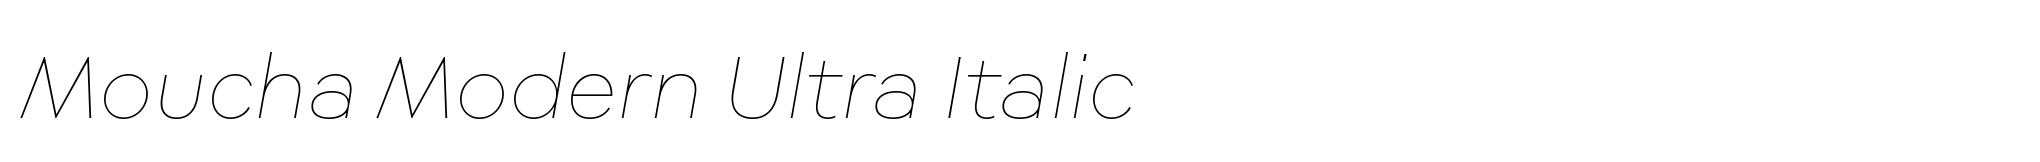 Moucha Modern Ultra Italic image